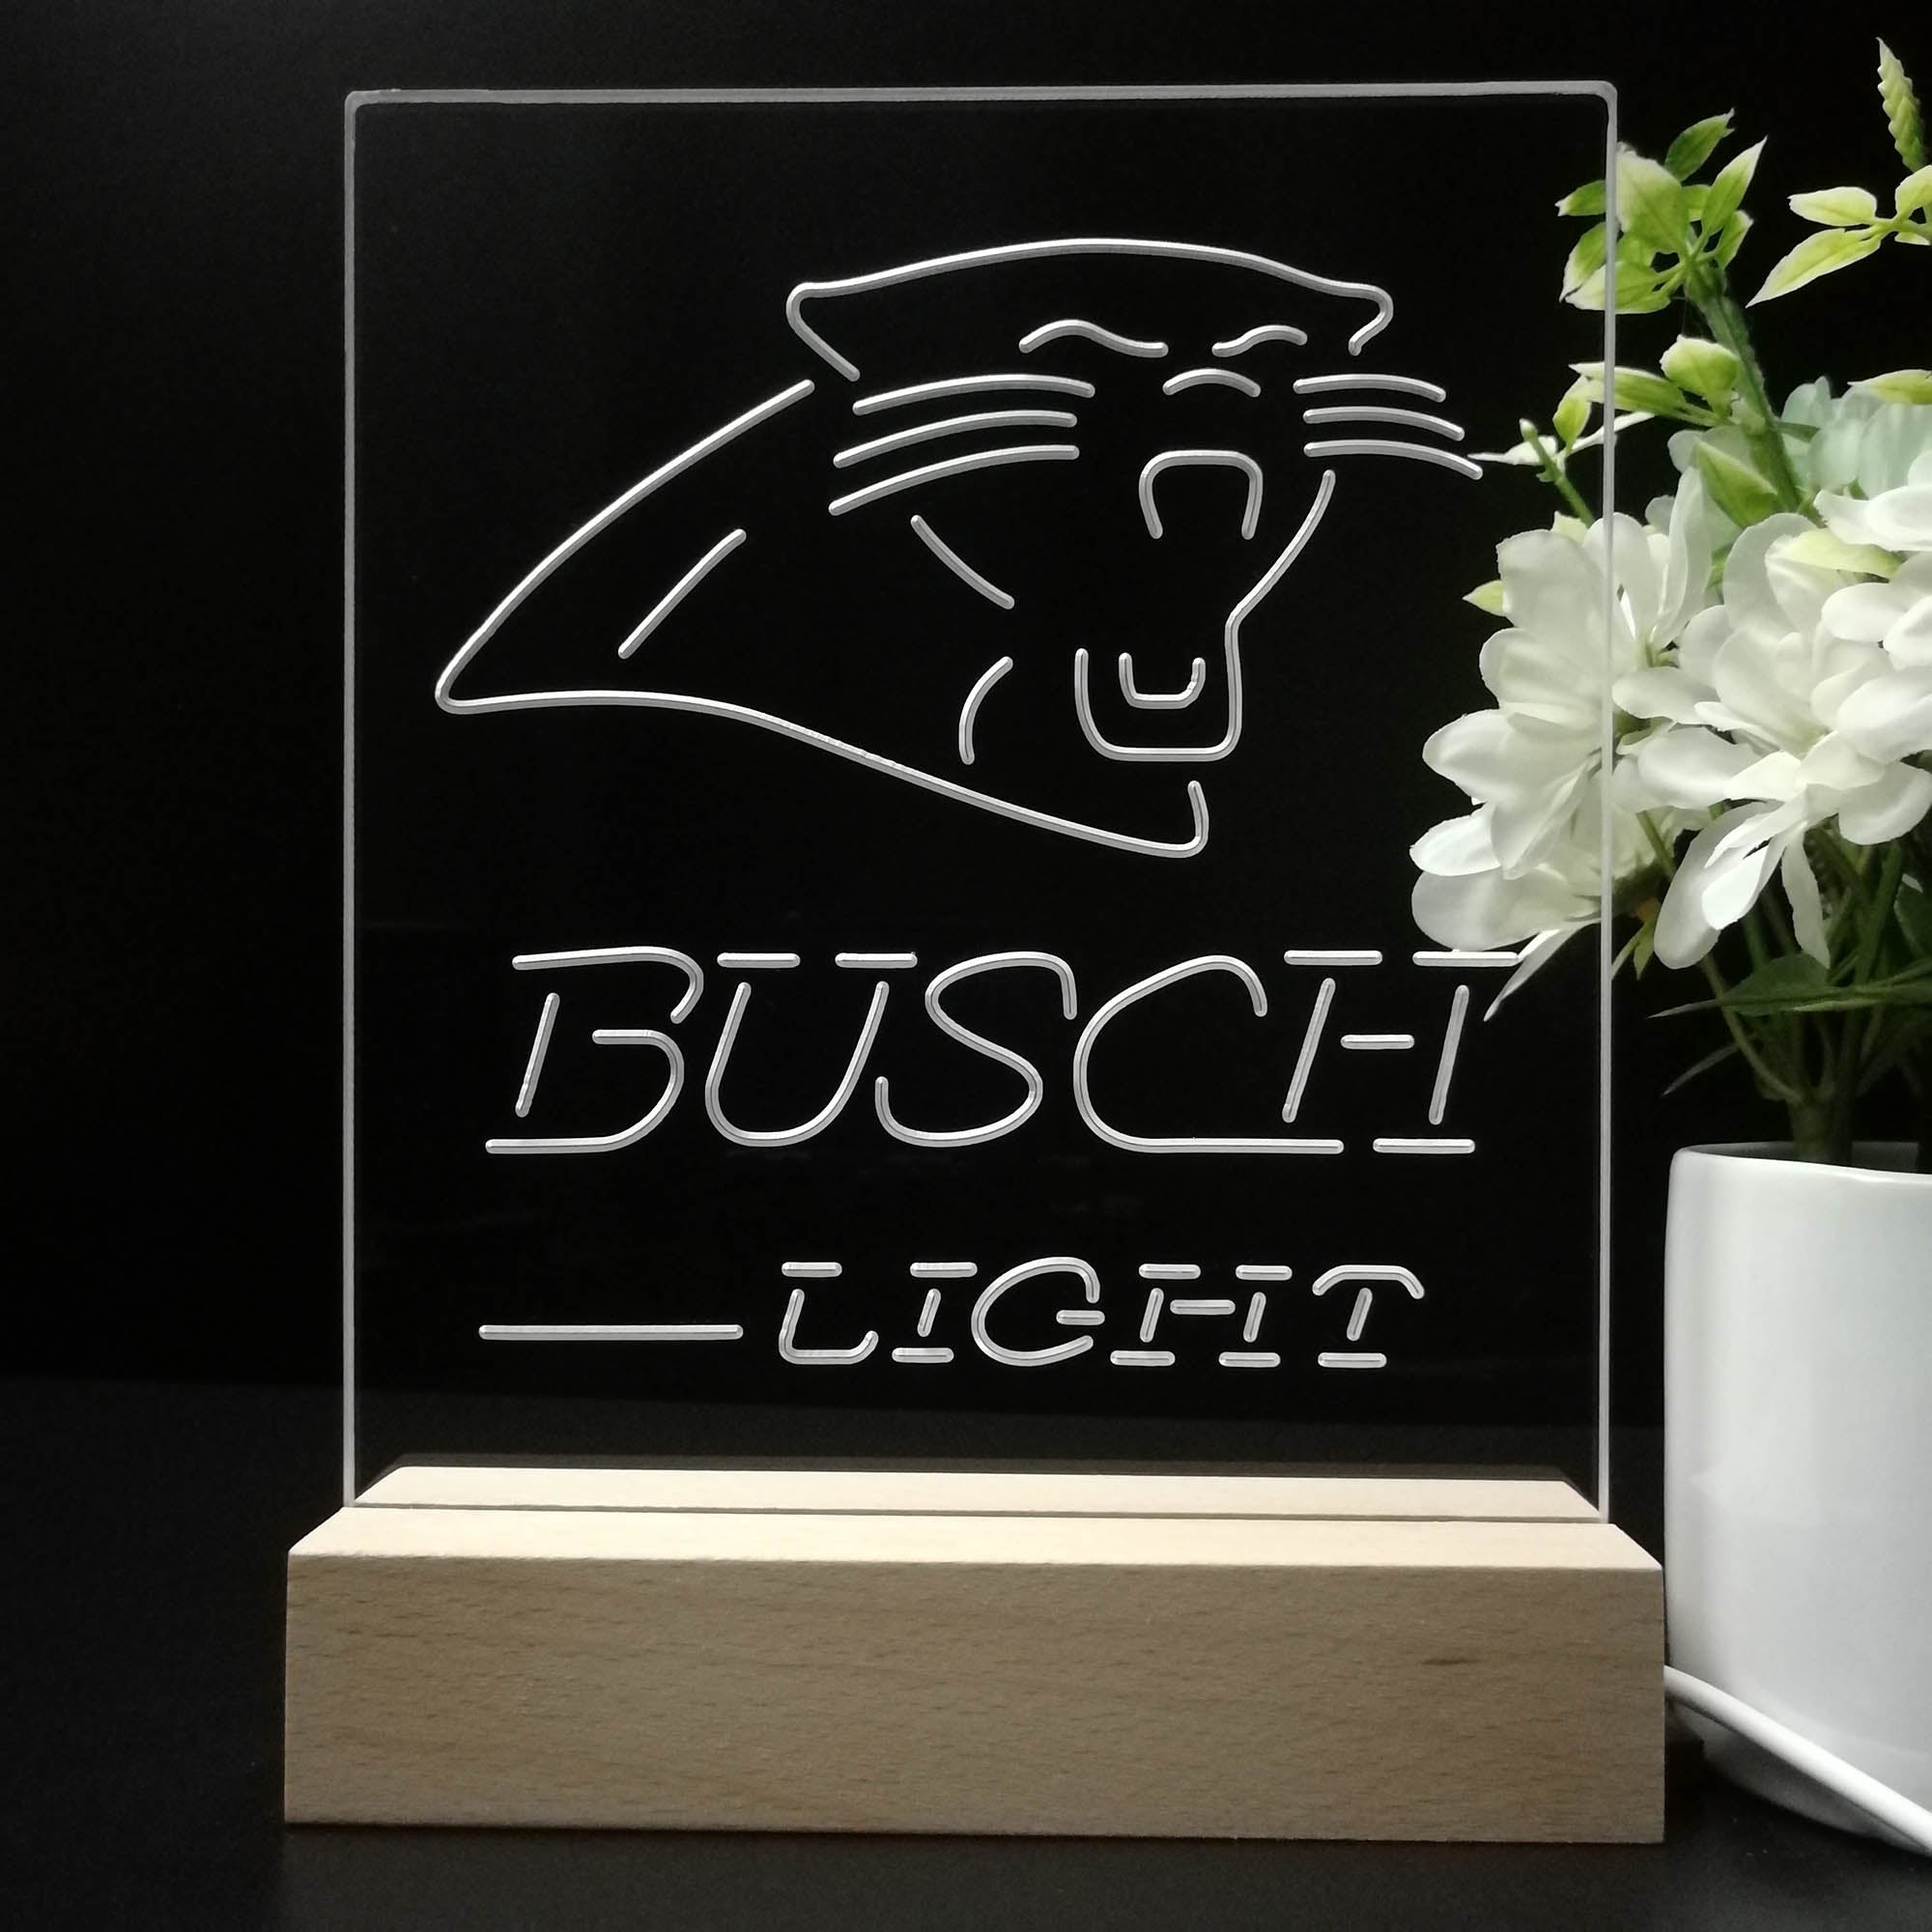 Busch Light Carolina Panthers 3D LED Optical Illusion Sport Team Night Light